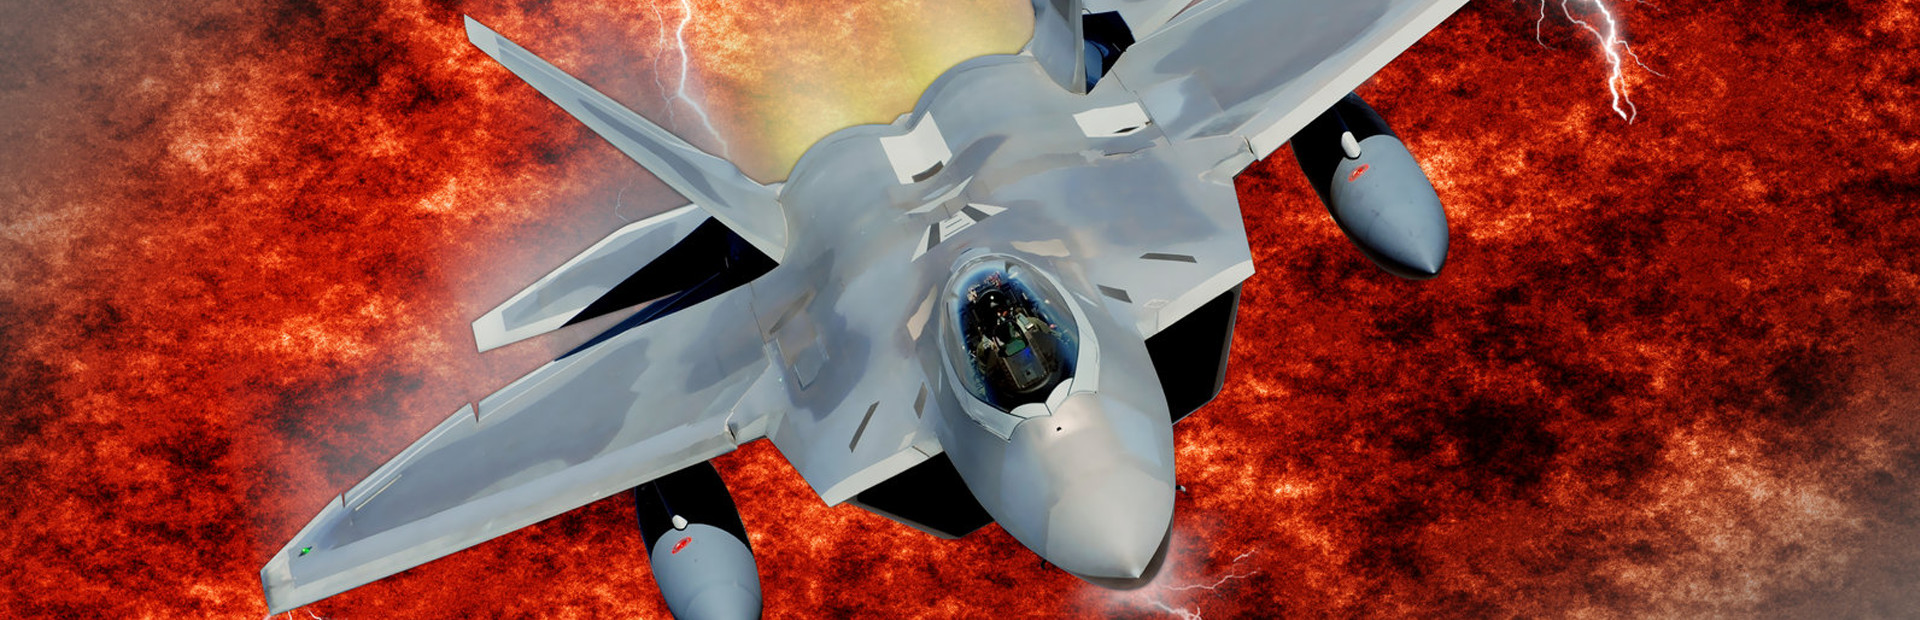 F-22 Lightning 3 cover image